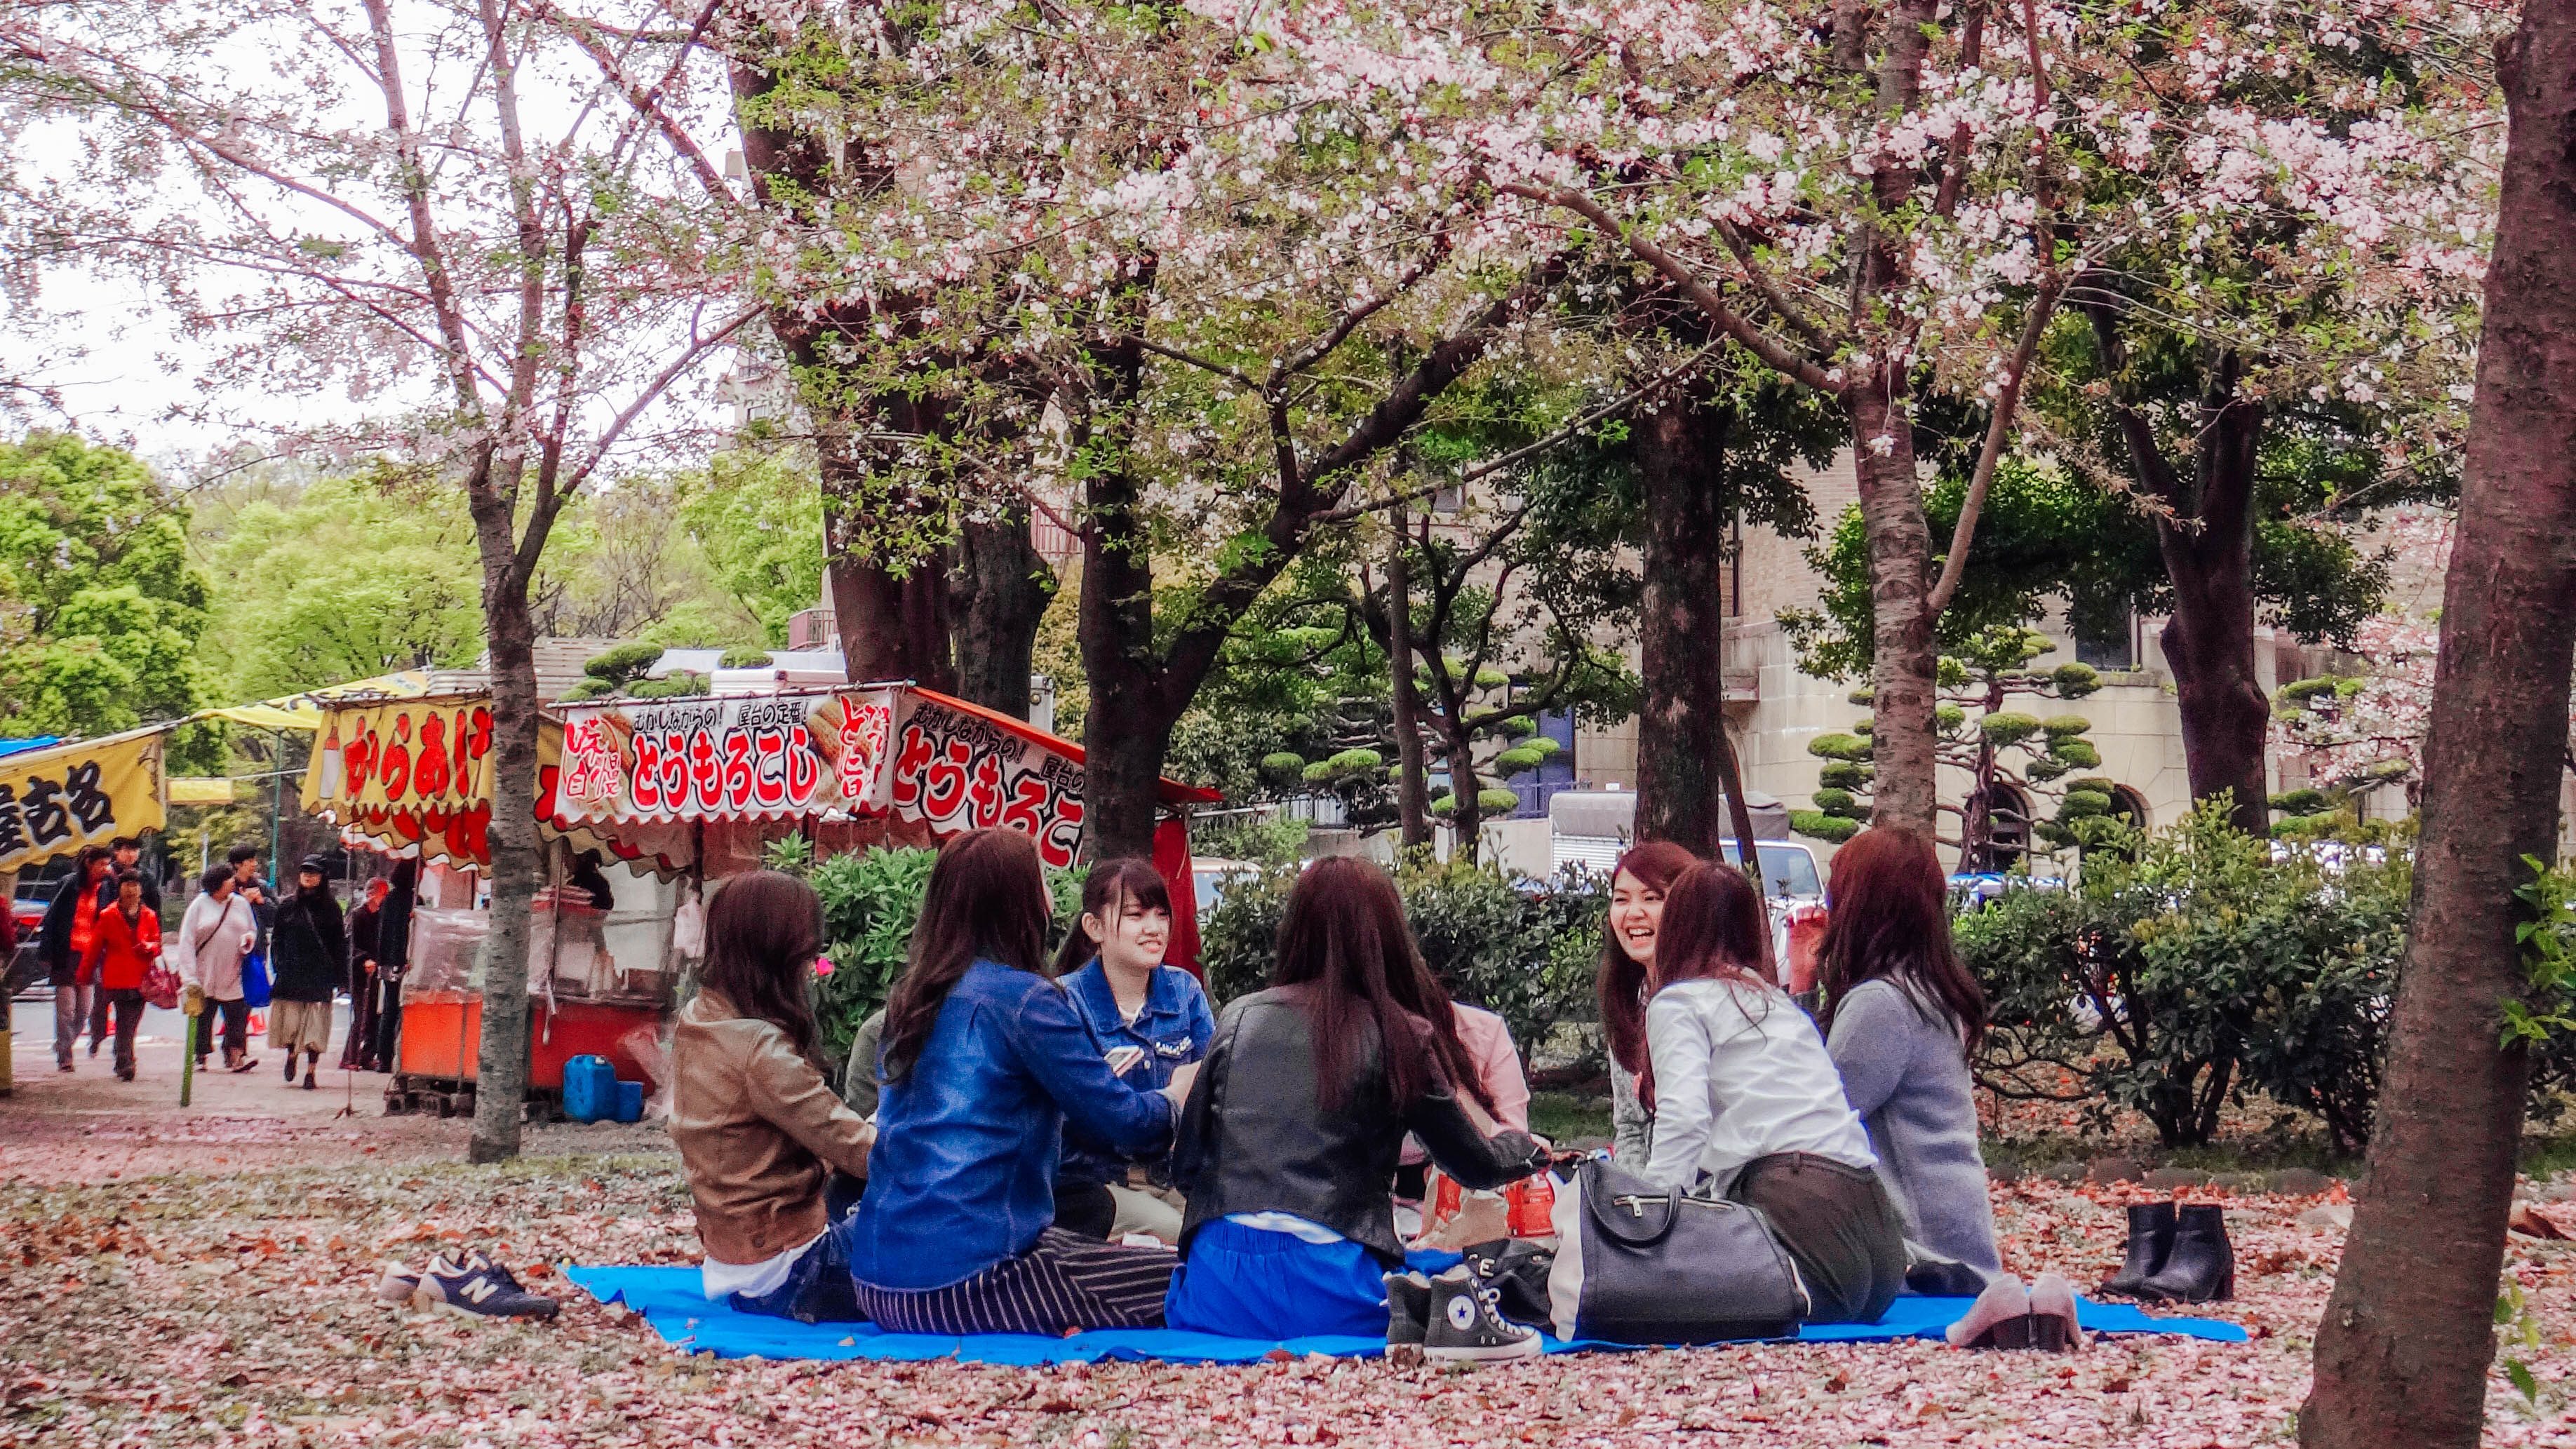 GATHER 'ROUND. Tsuruma Park, one of many beautiful sakura viewing spots in Japan. Photo provided by Irene Maligat 